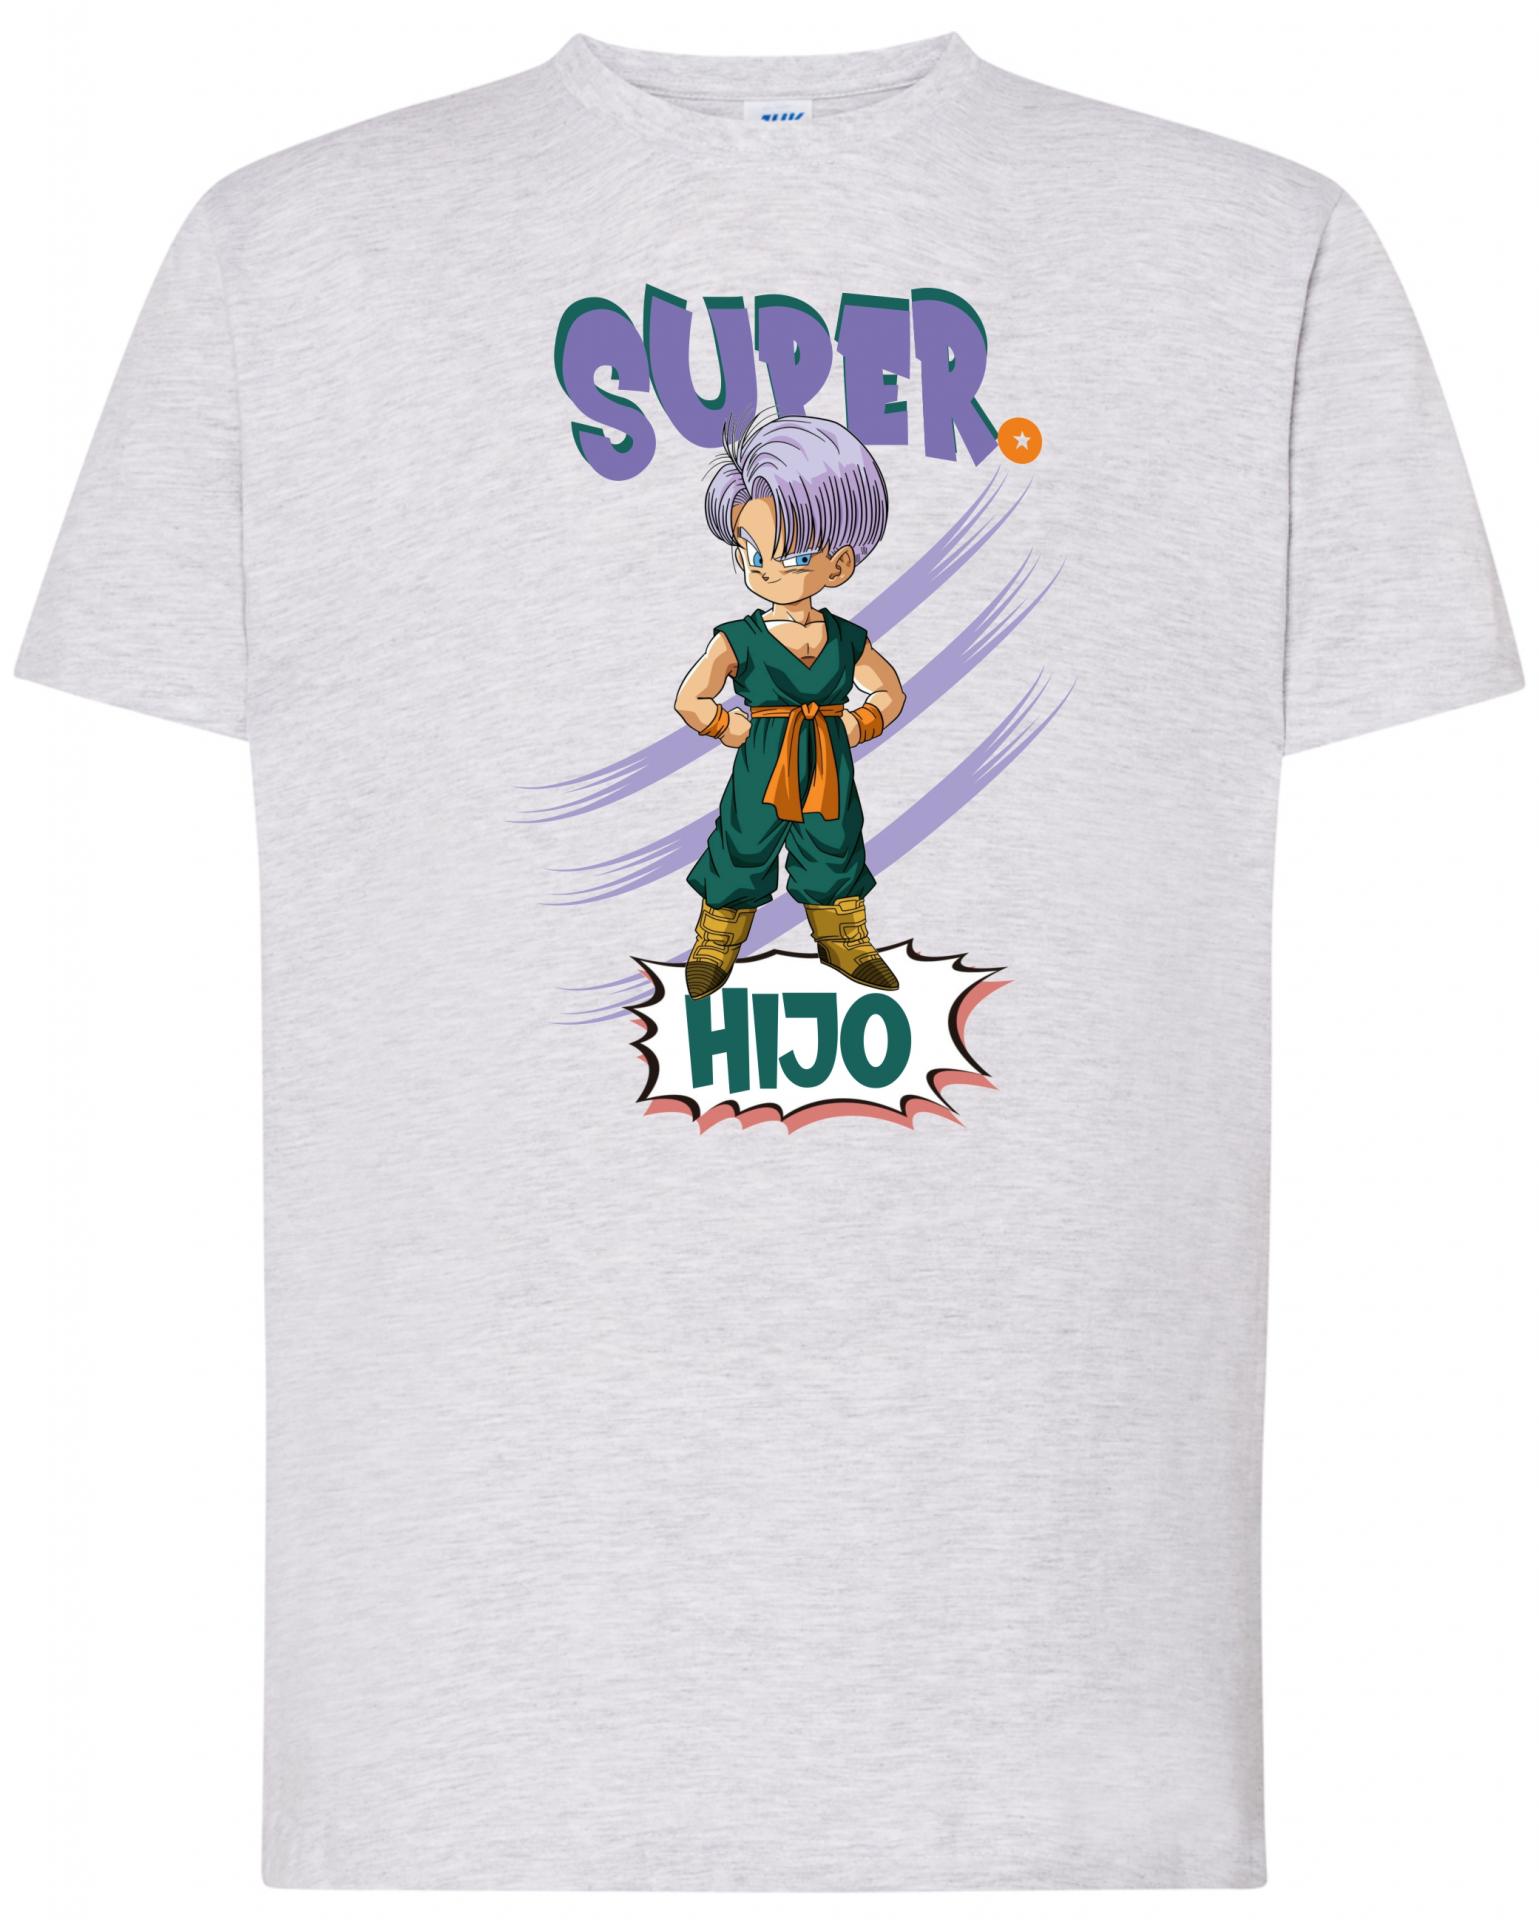 Coherente Rubí césped Compra tu Camiseta Dia del Padre - Super Hijo Trunks Dragon Ball: 9,80 €